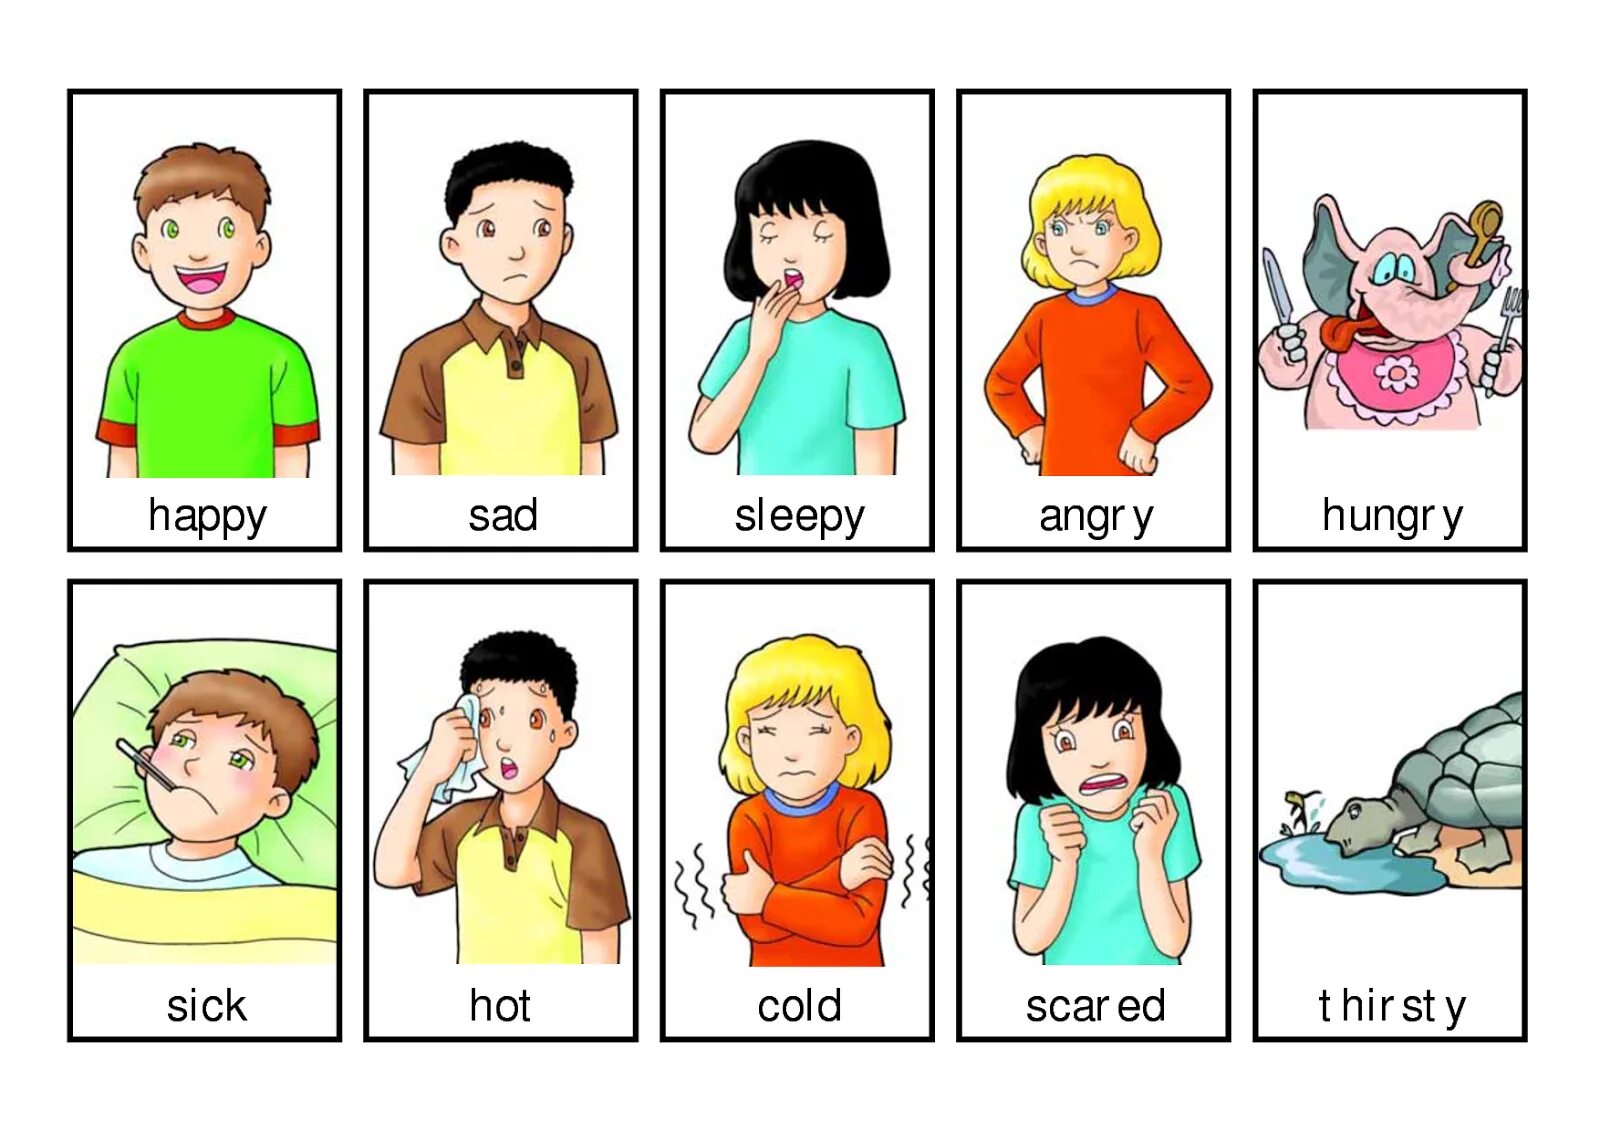 Are you happy yes. Карточки эмоции на английском. Карточки эмоции на английском для детей. Карточки эмоции для детей. Эмоции на англ для детей.